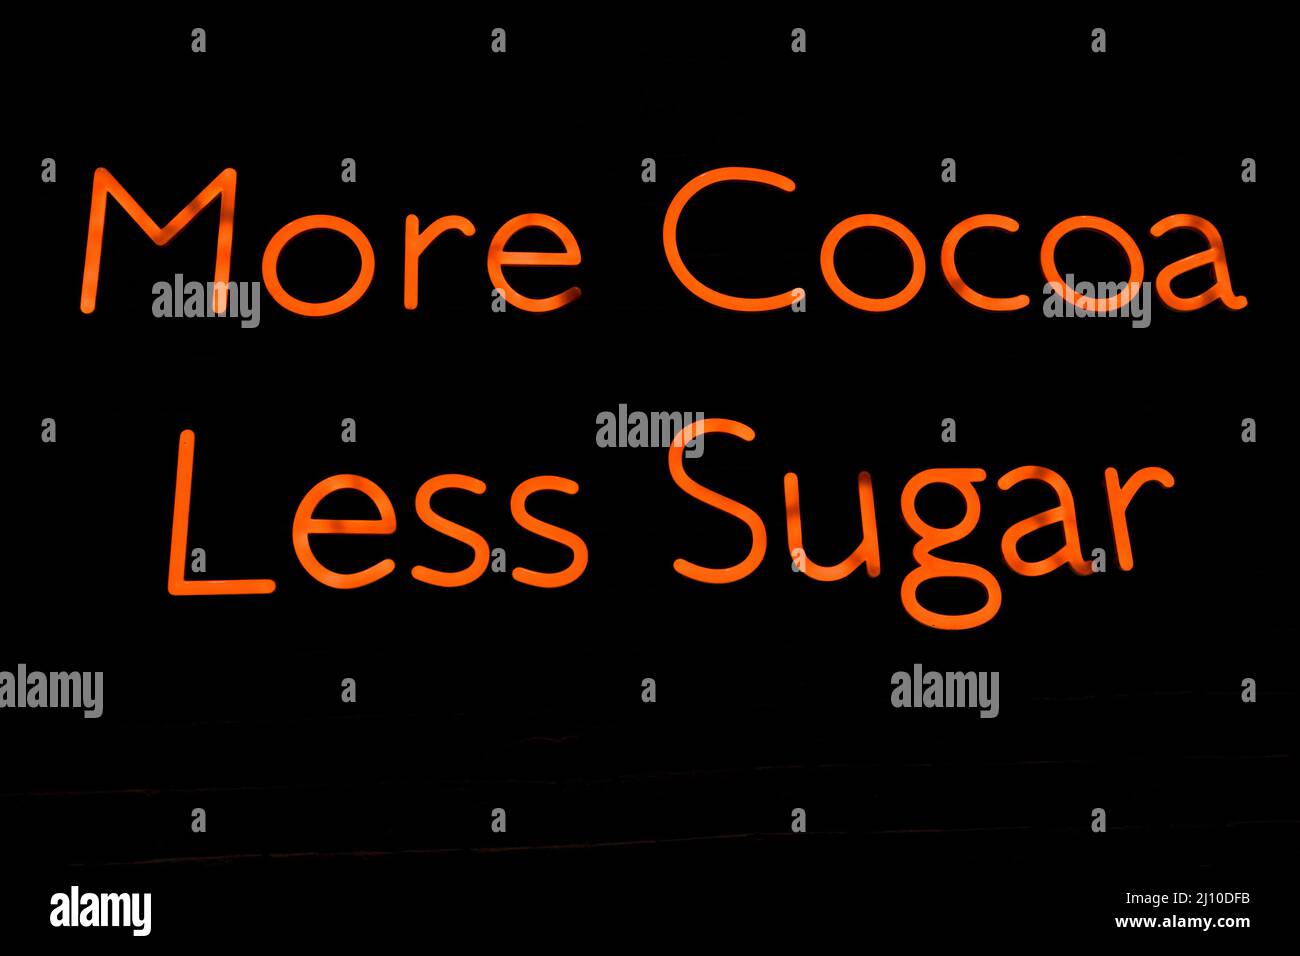 More cocoa less sugar sign Stock Photo